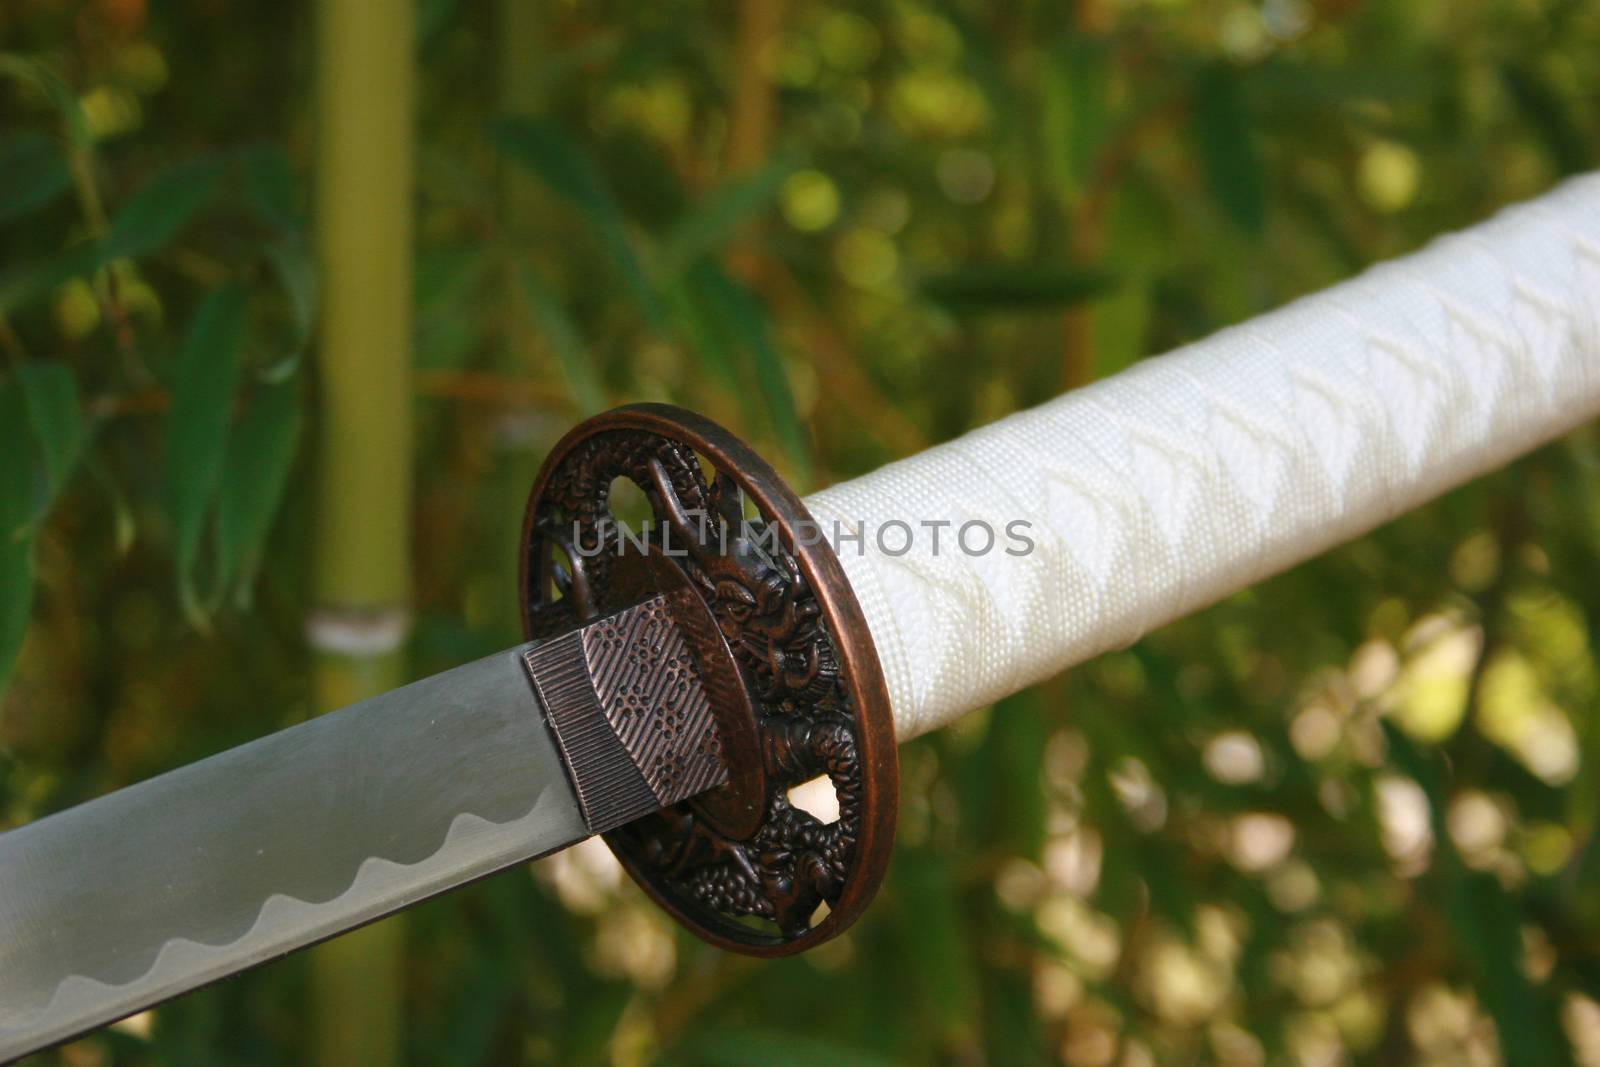 Katana Samurai Sword With Bamboo Forest by Marti157900